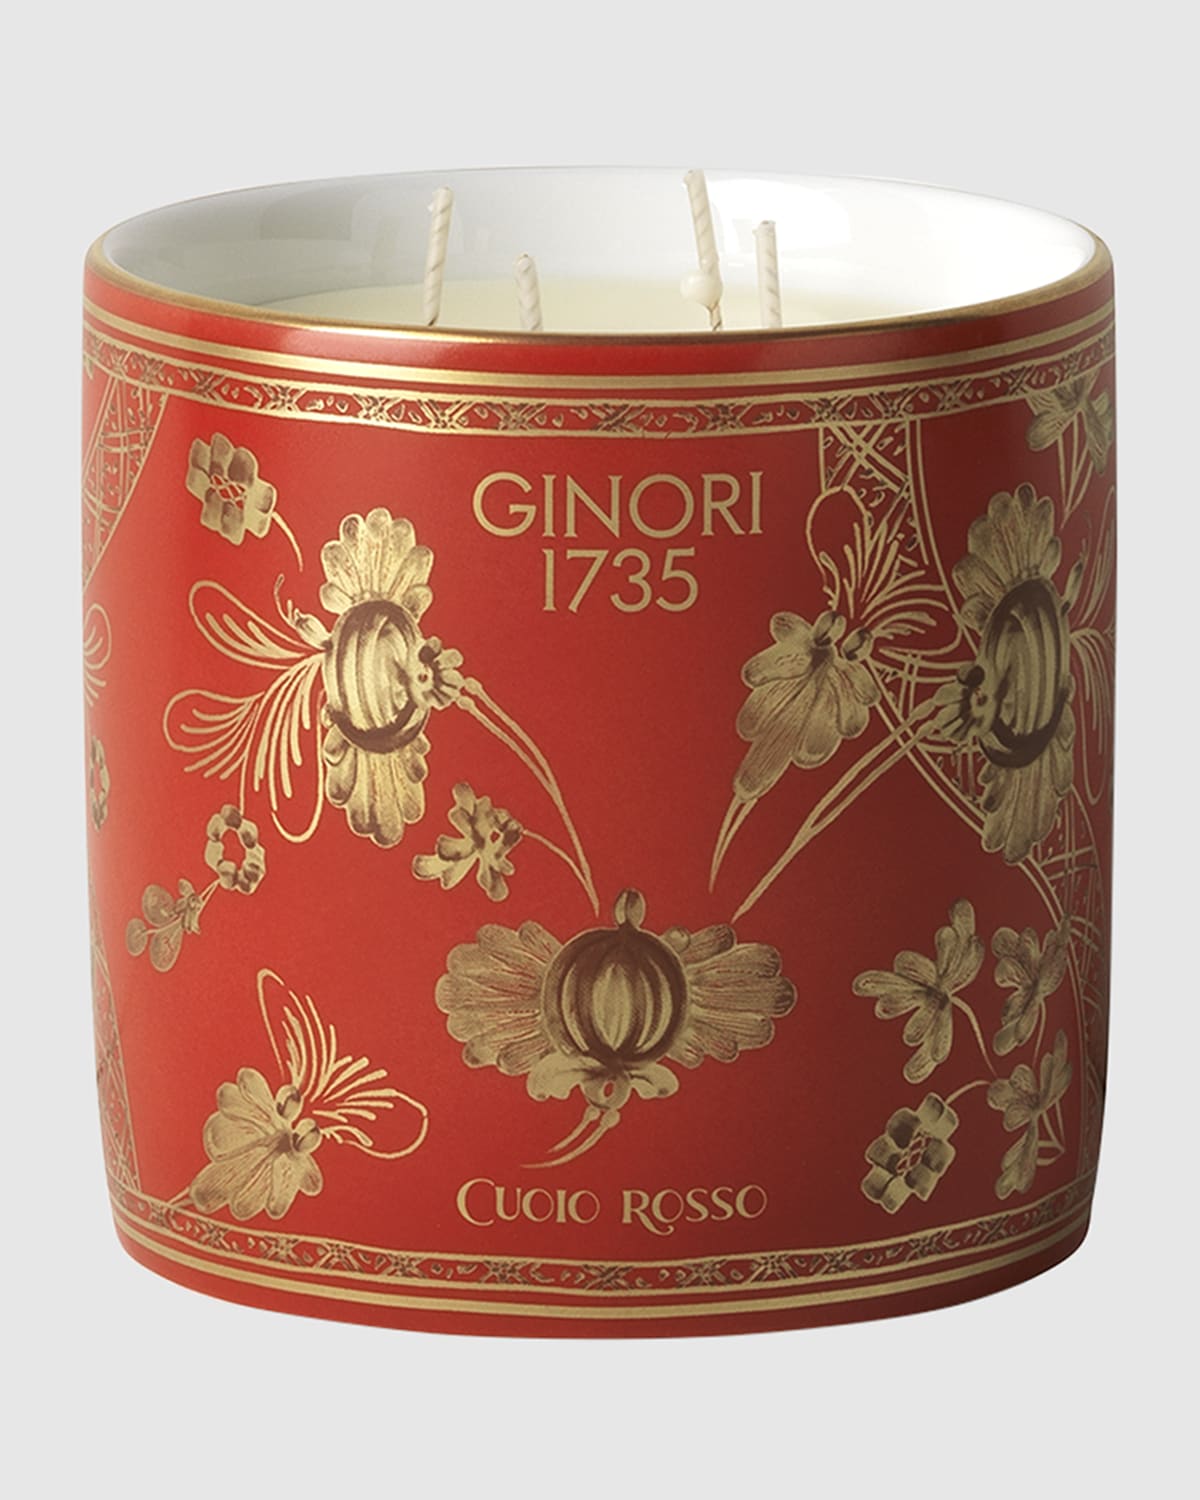 Ginori 1735 Oriente Italiano Rubrum Cuoio Rosso Candle, 700g In Oirubrum-cuoio